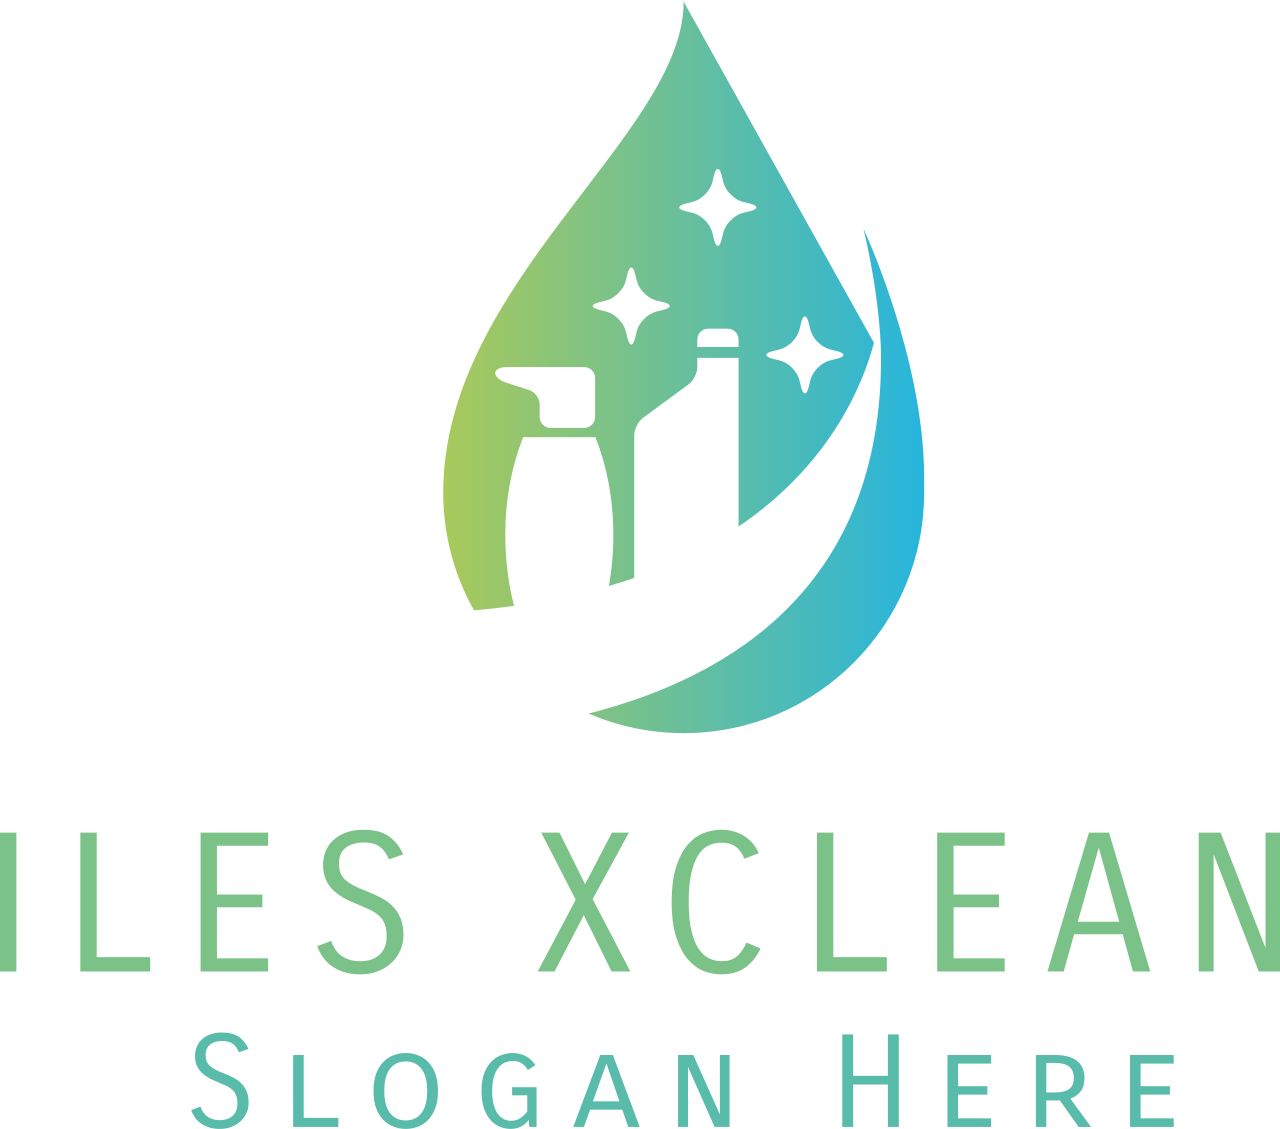 Iles xclean 's logo